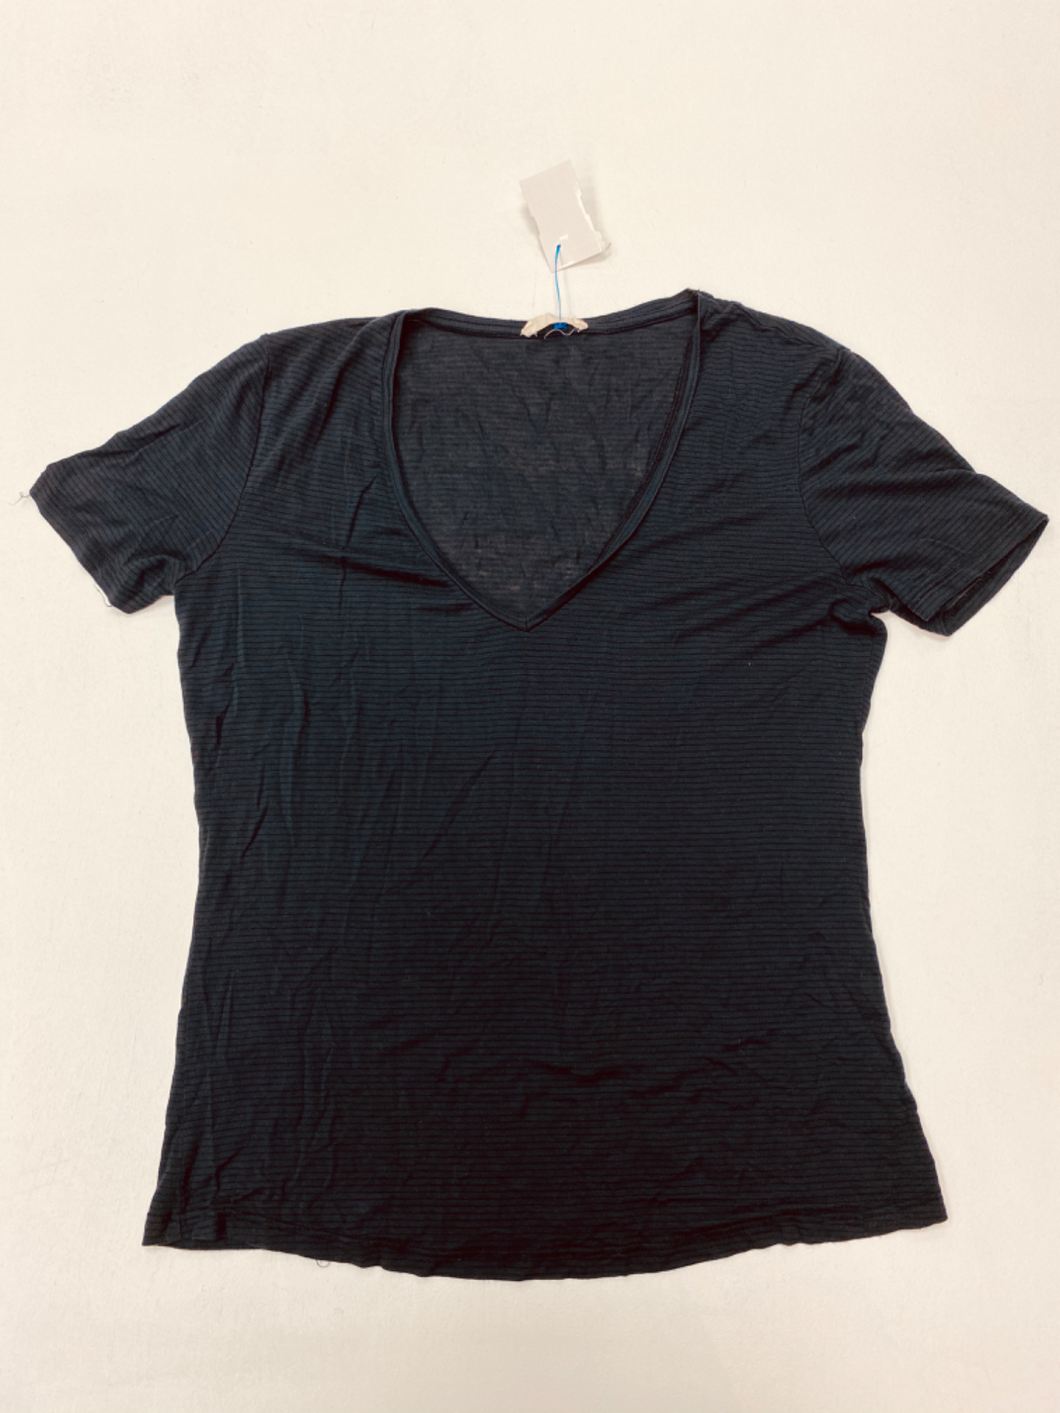 Zara T-Shirt Size Medium